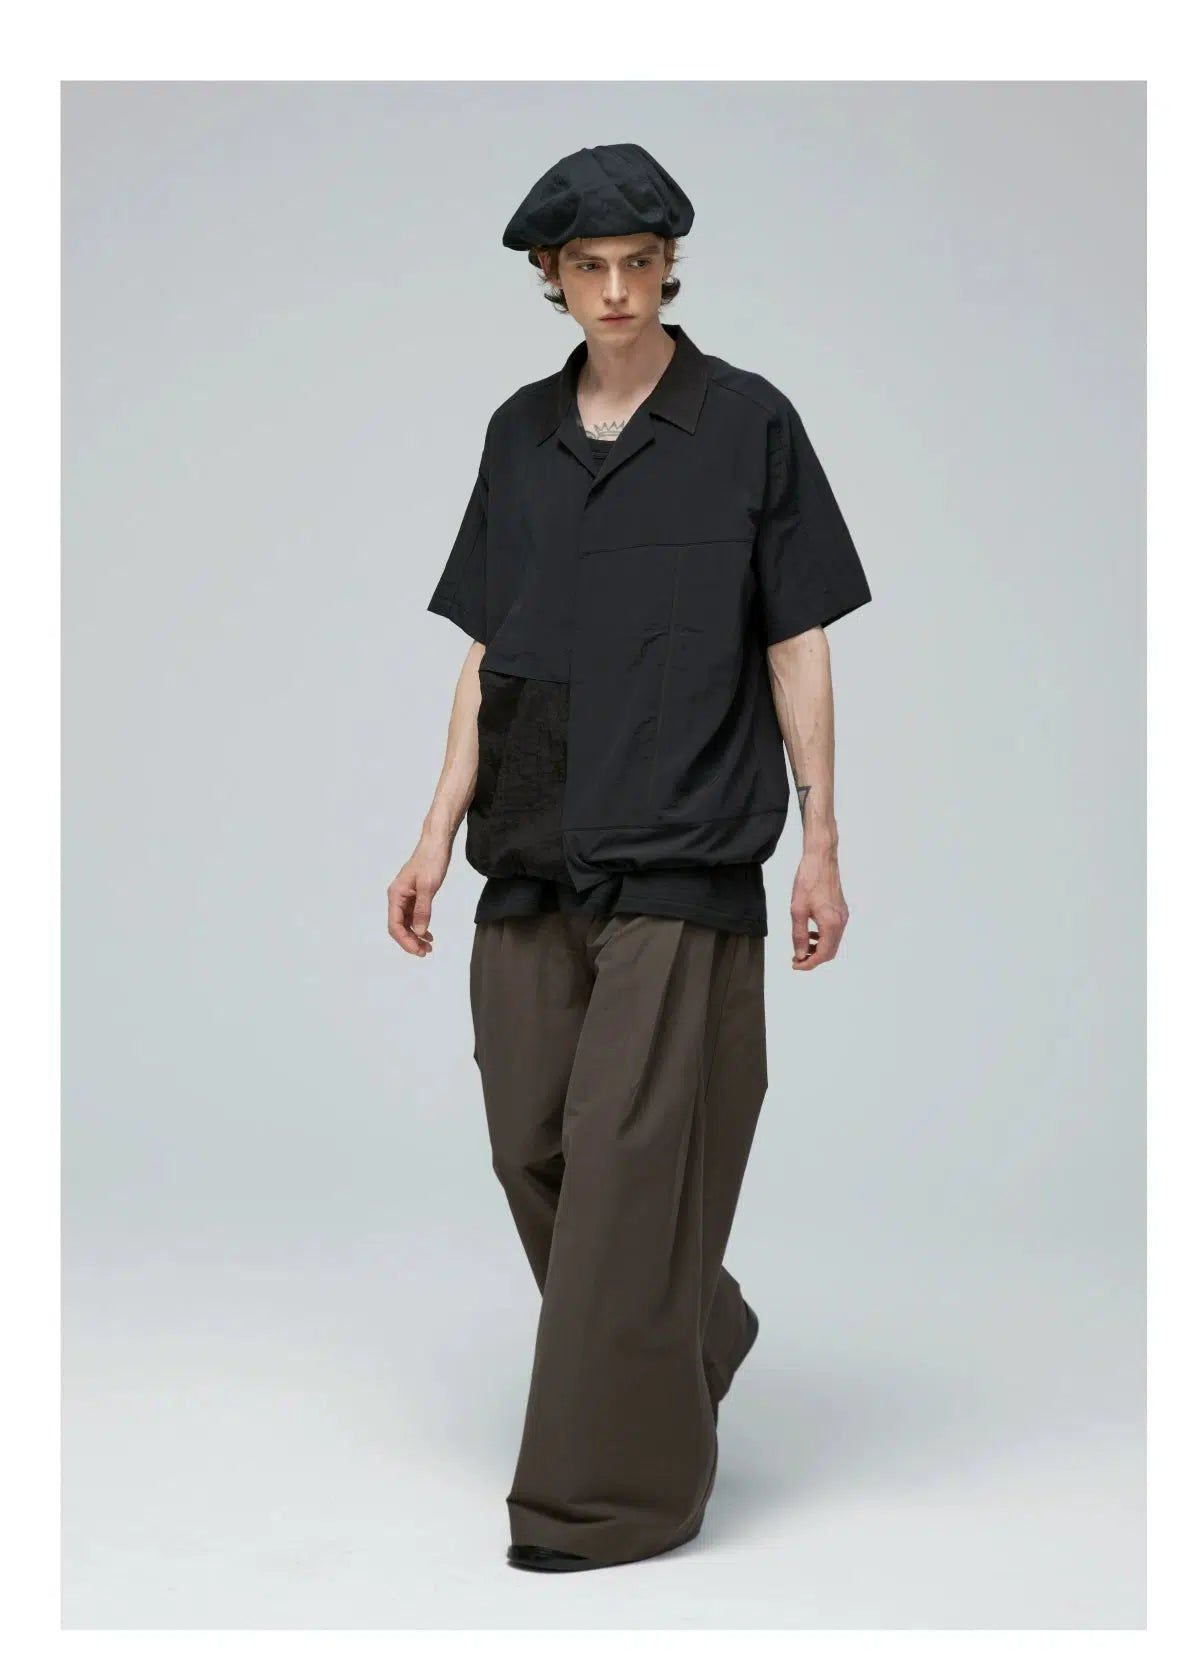 Spliced Buttoned Shirt Korean Street Fashion Shirt By Decesolo Shop Online at OH Vault